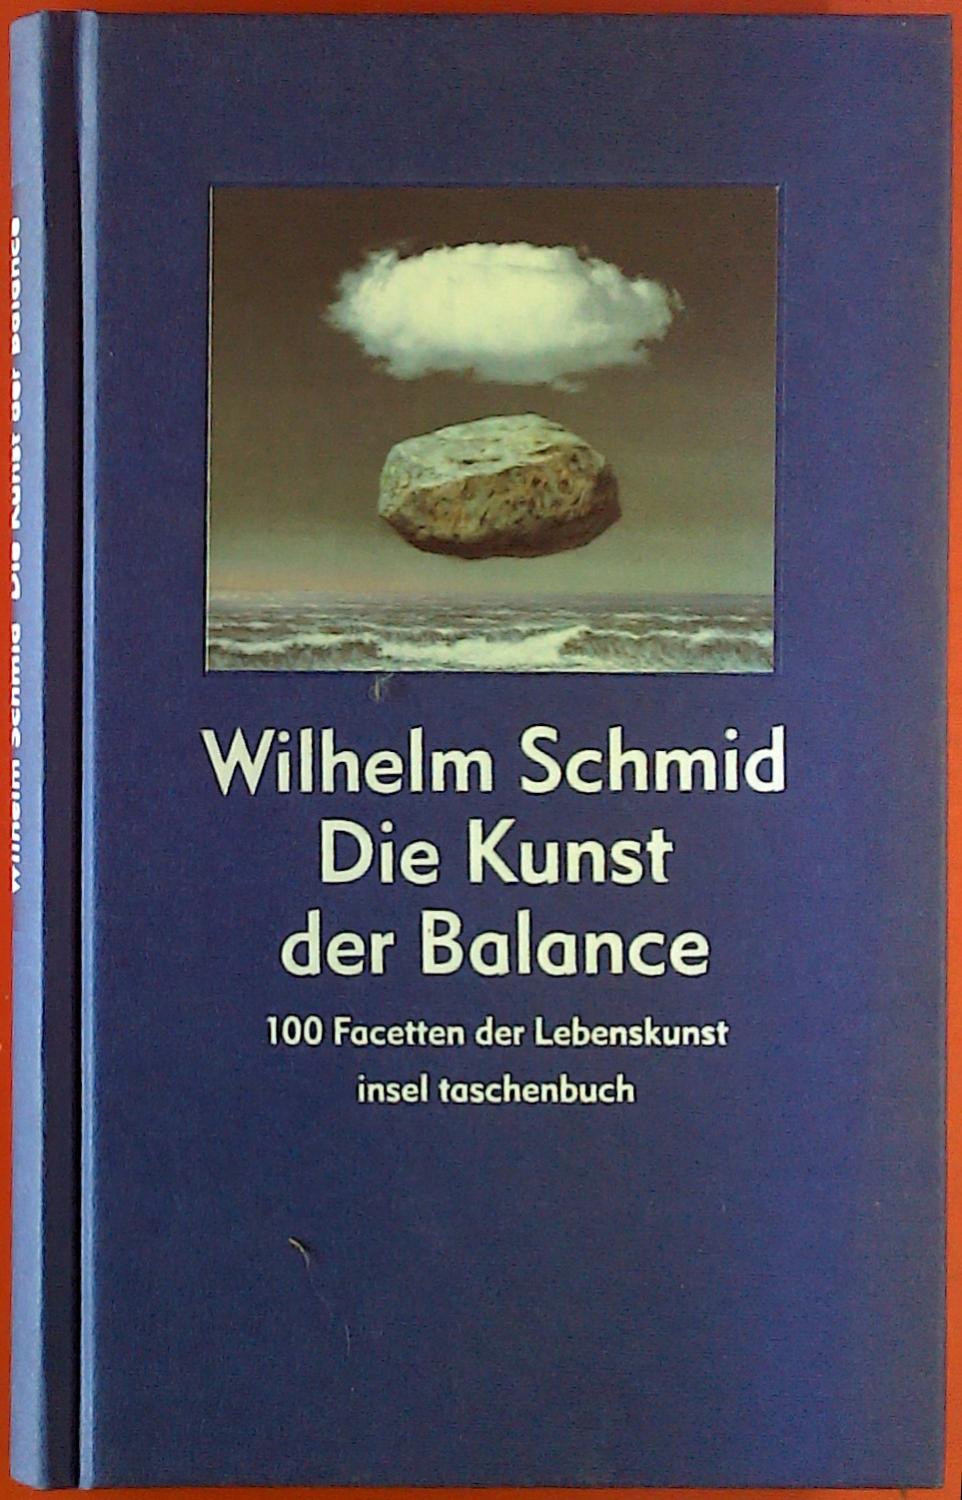 Die Kunst der Balance. 100 Facetten der Lebenskunst